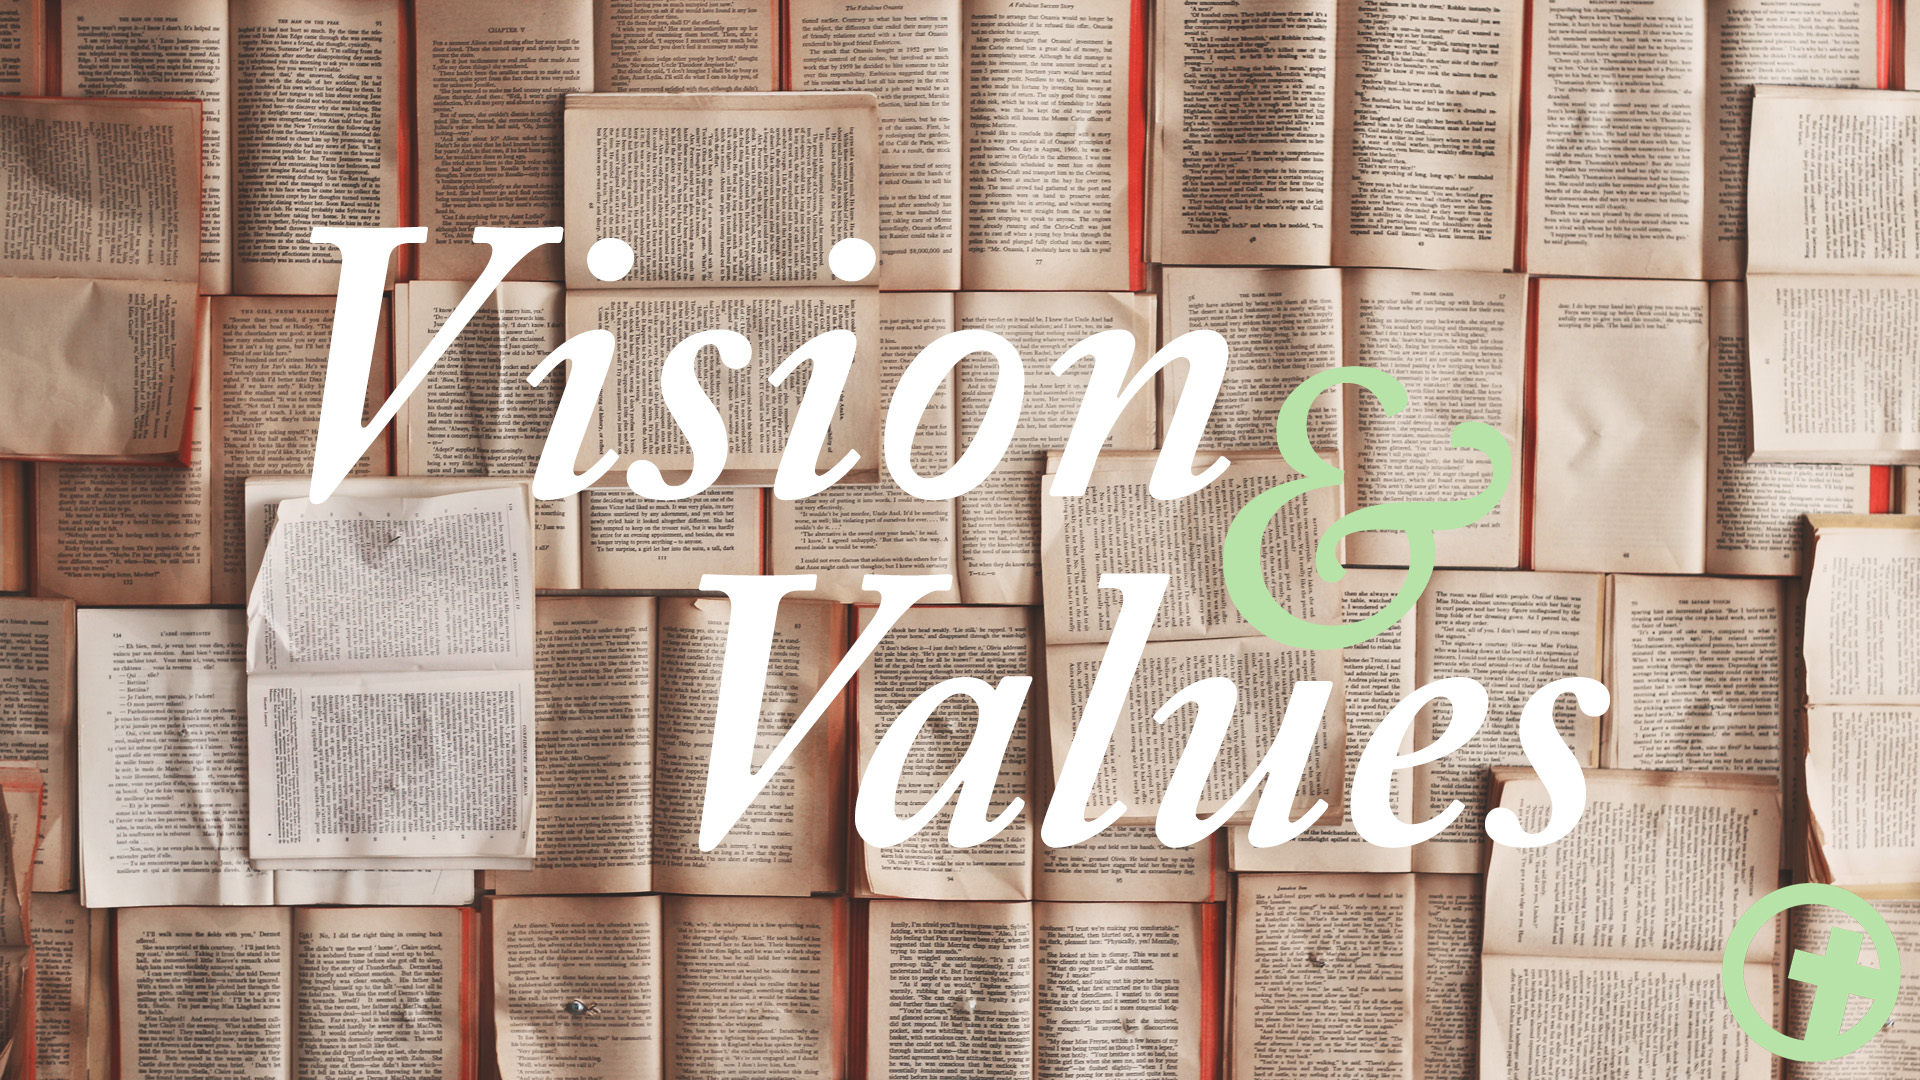 Vision & Values Sunday: Redbull Or The Spirit